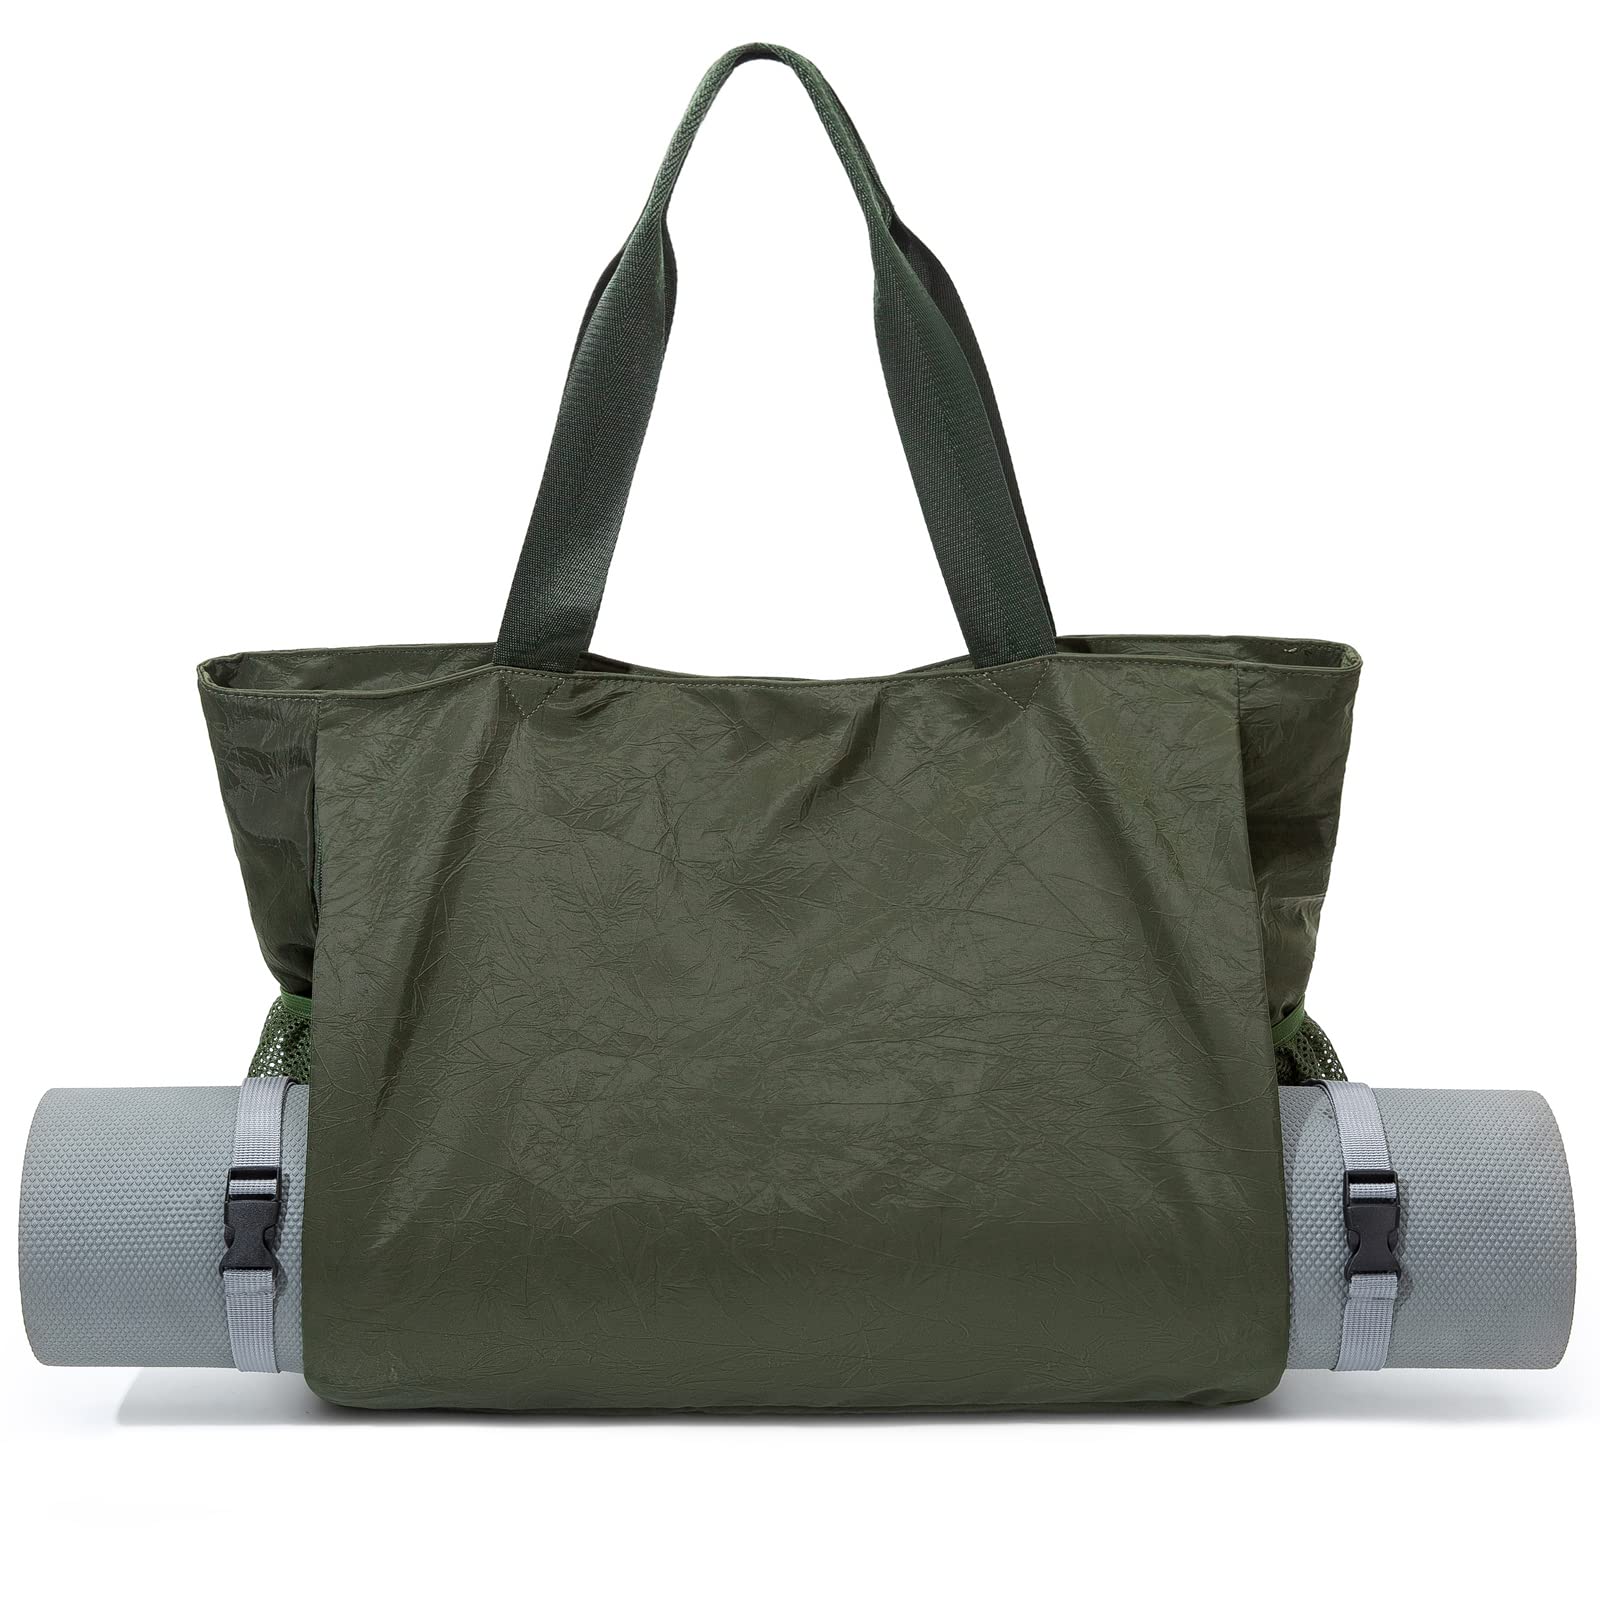 Yoga Women Canvas Tote Shoulder Bag Fashion Gym Bag with Yoga Mat